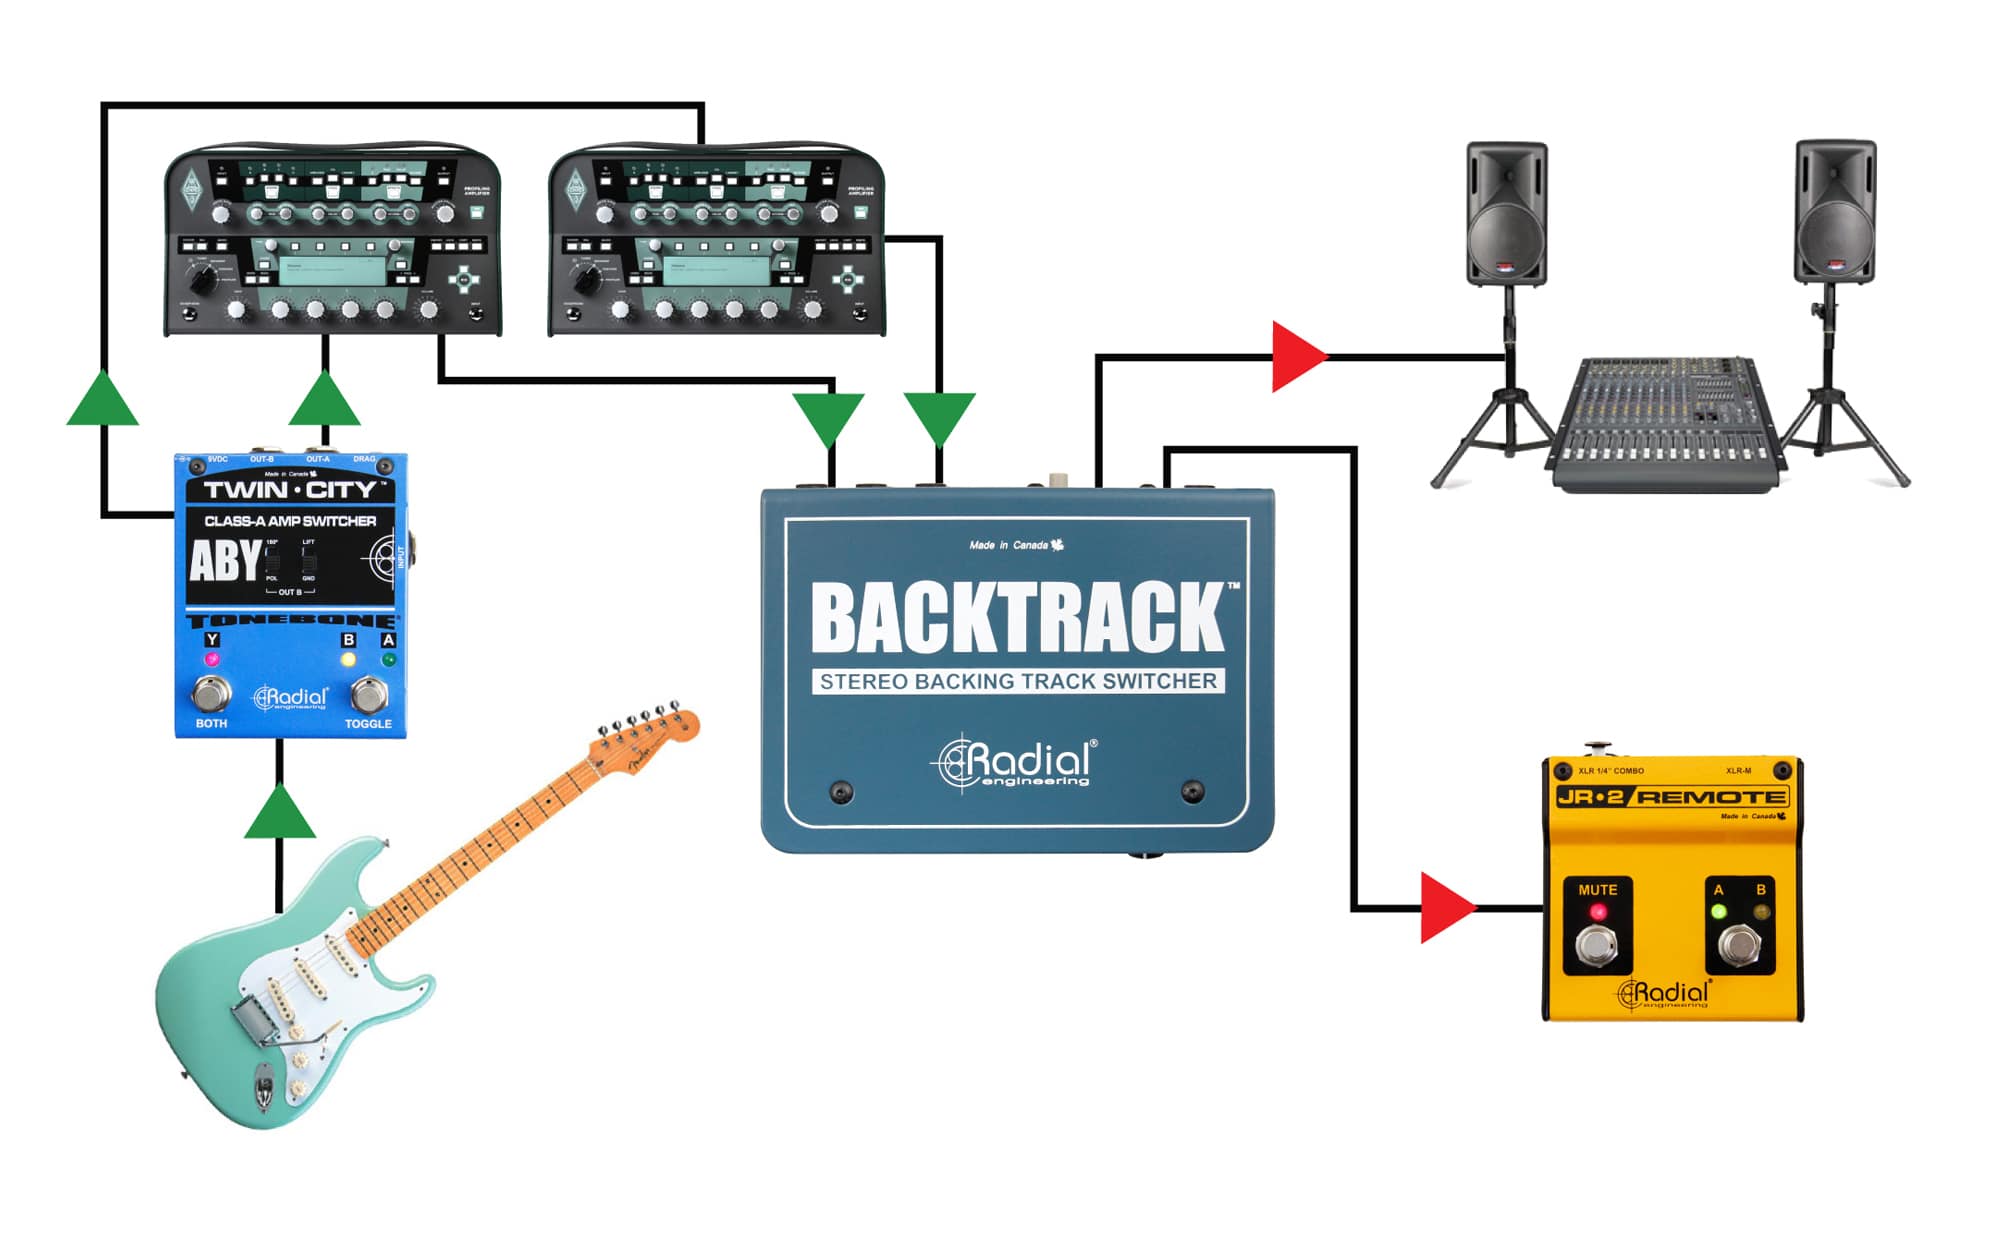 Backtrack with redundant amp modelers